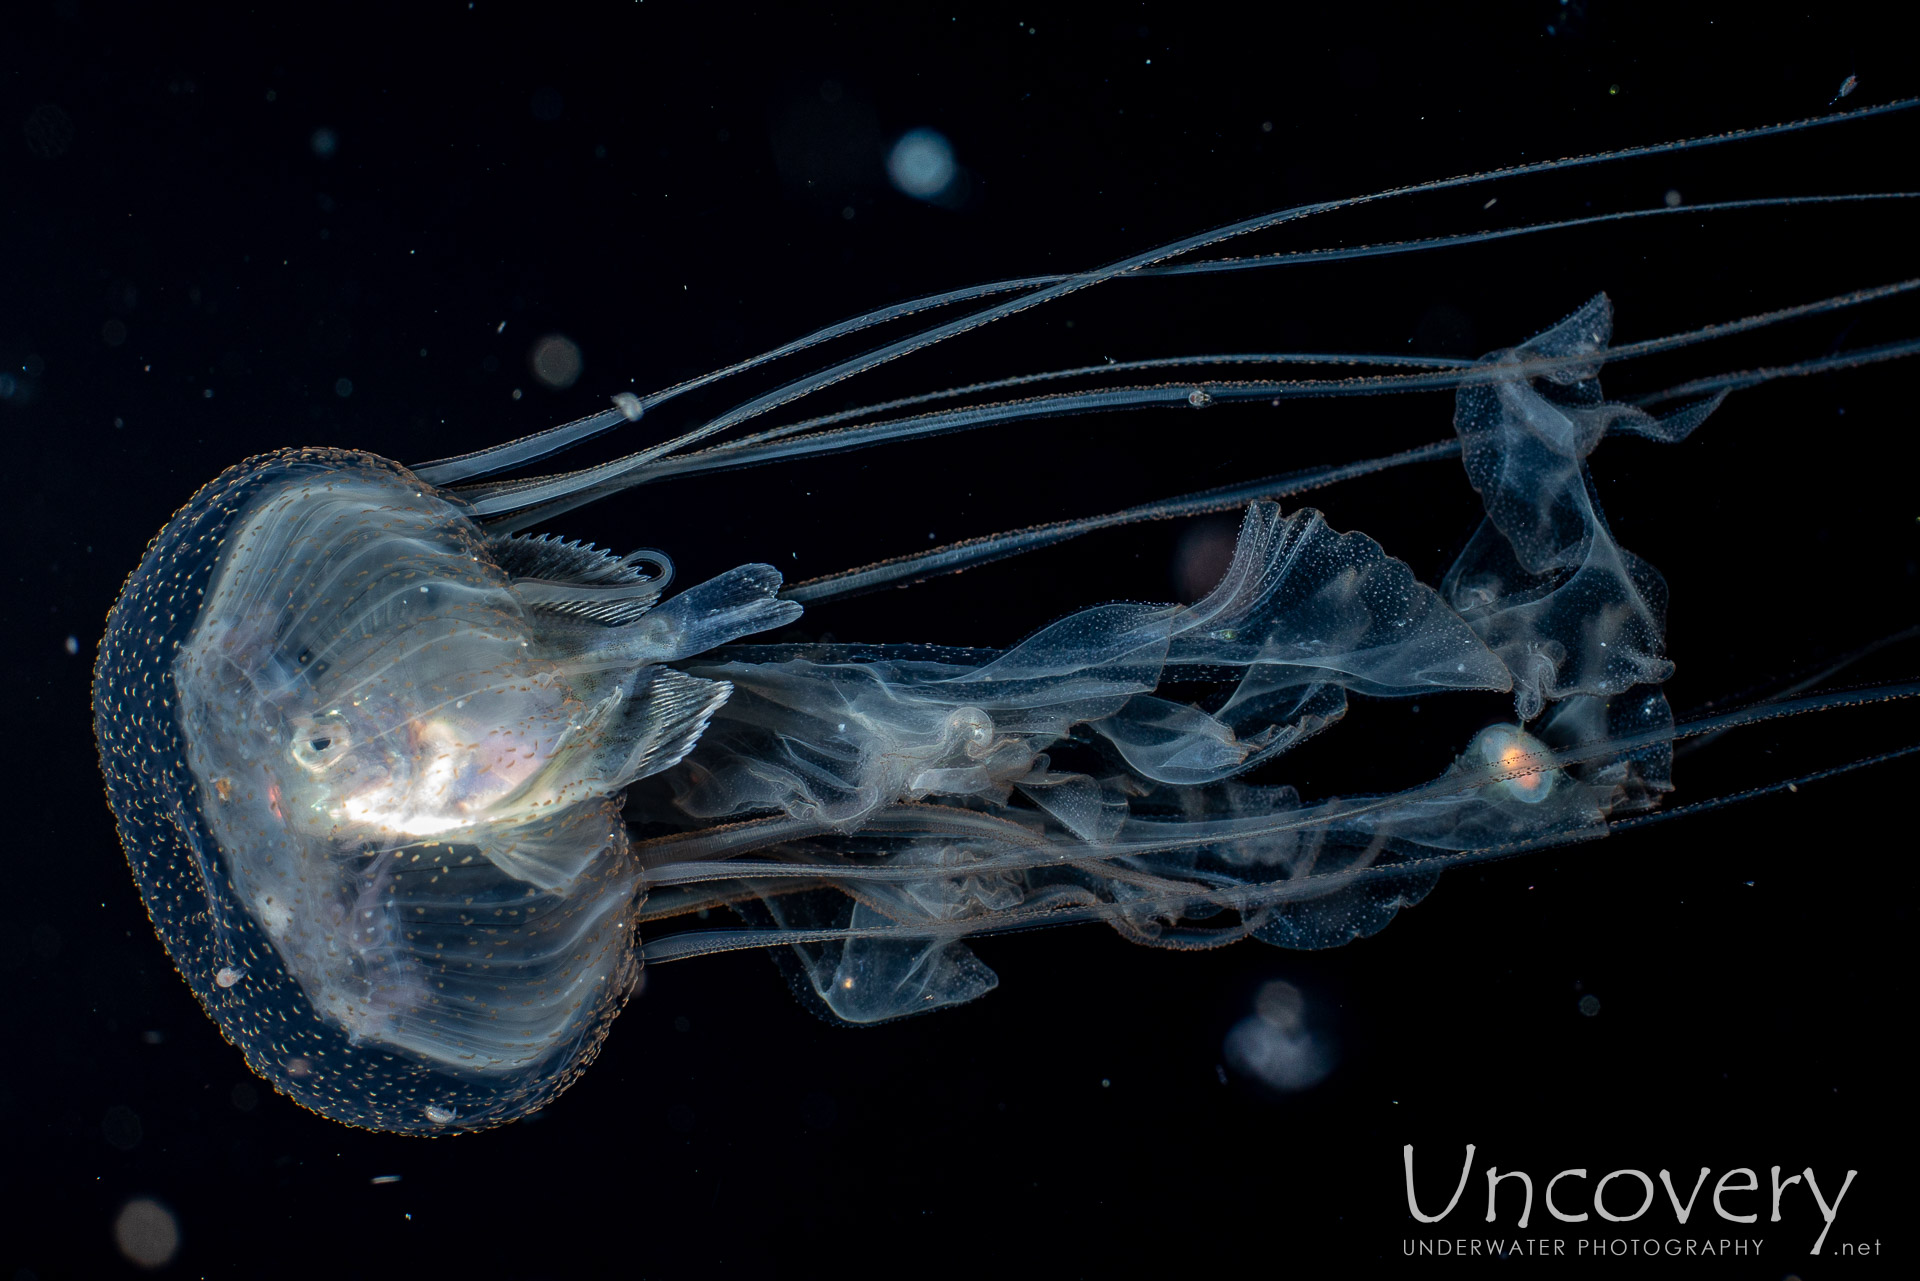 Jellyfish, photo taken in Indonesia, Bali, Tulamben, Blackwater